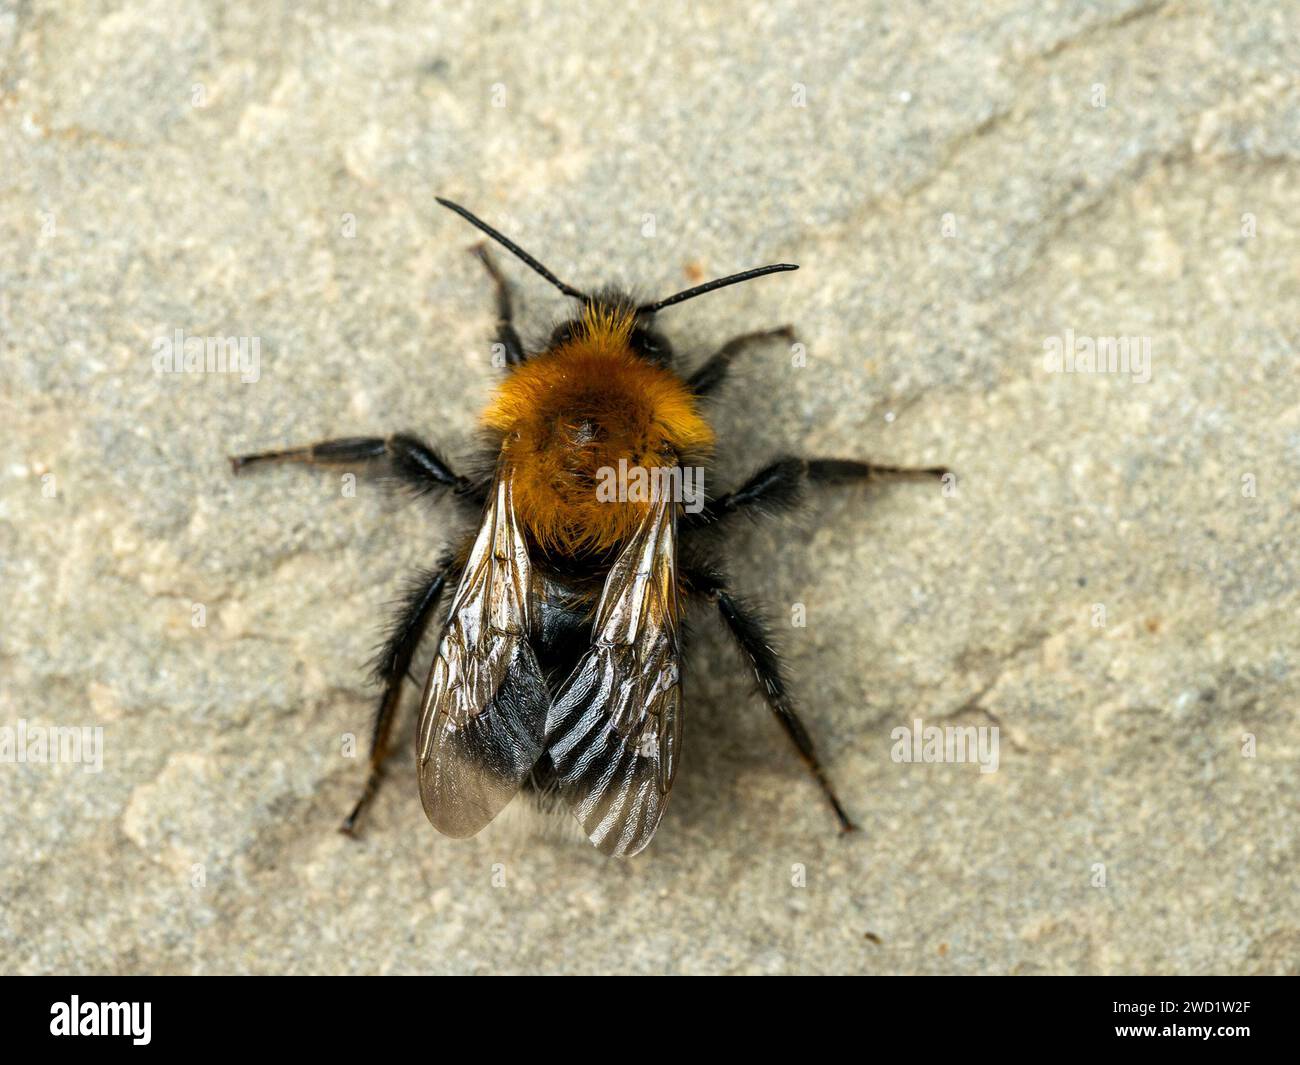 Closeup of a single wild tree bumble bee, Bombus hypnorumon on natural stone slab, Leicestershire, England, UK Stock Photo